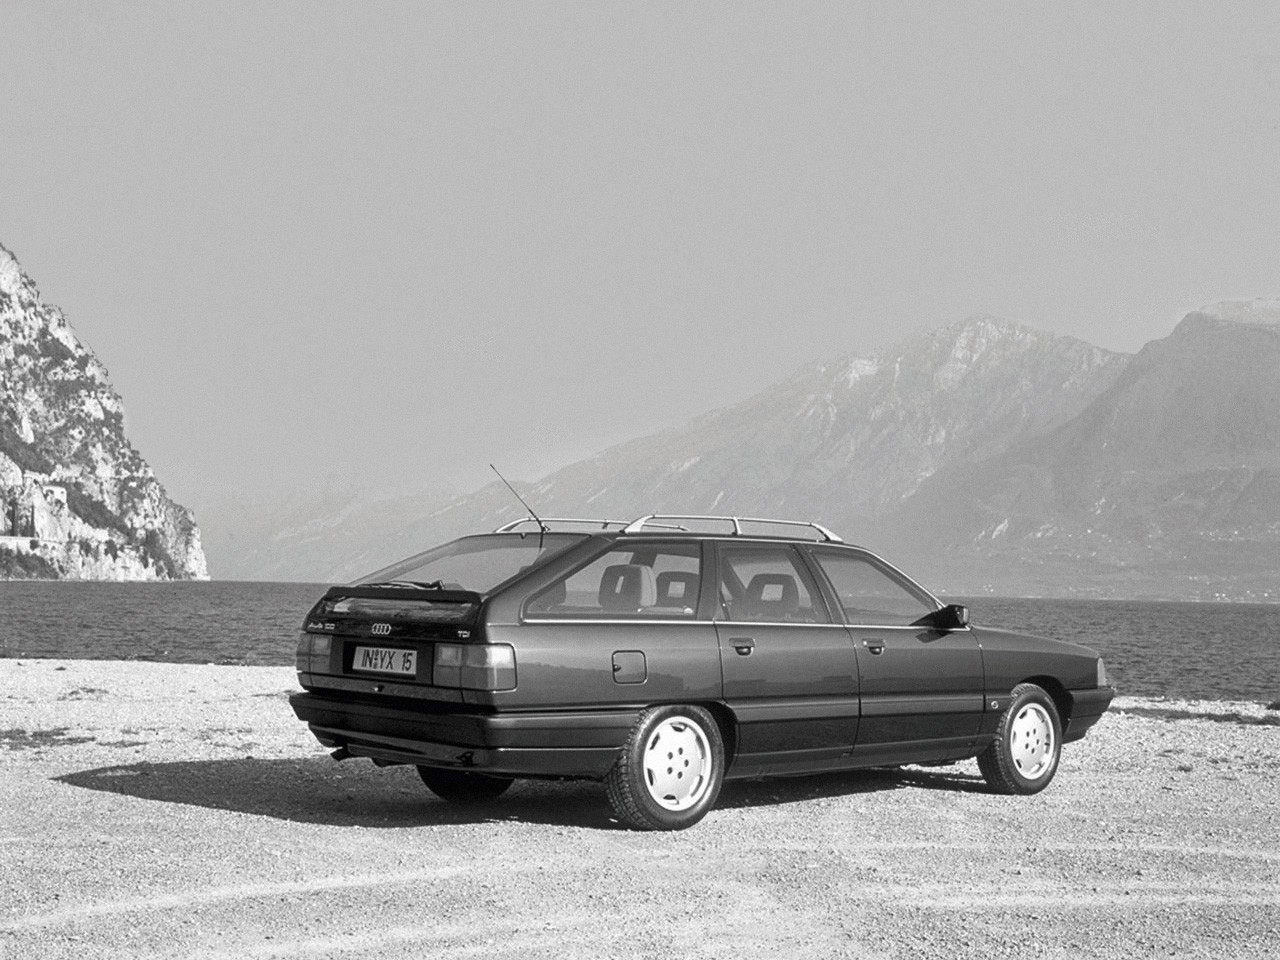 AUDI 100 Avant (C3) - 1983, 1984, 1985, 1986, 1987, 1988 ...